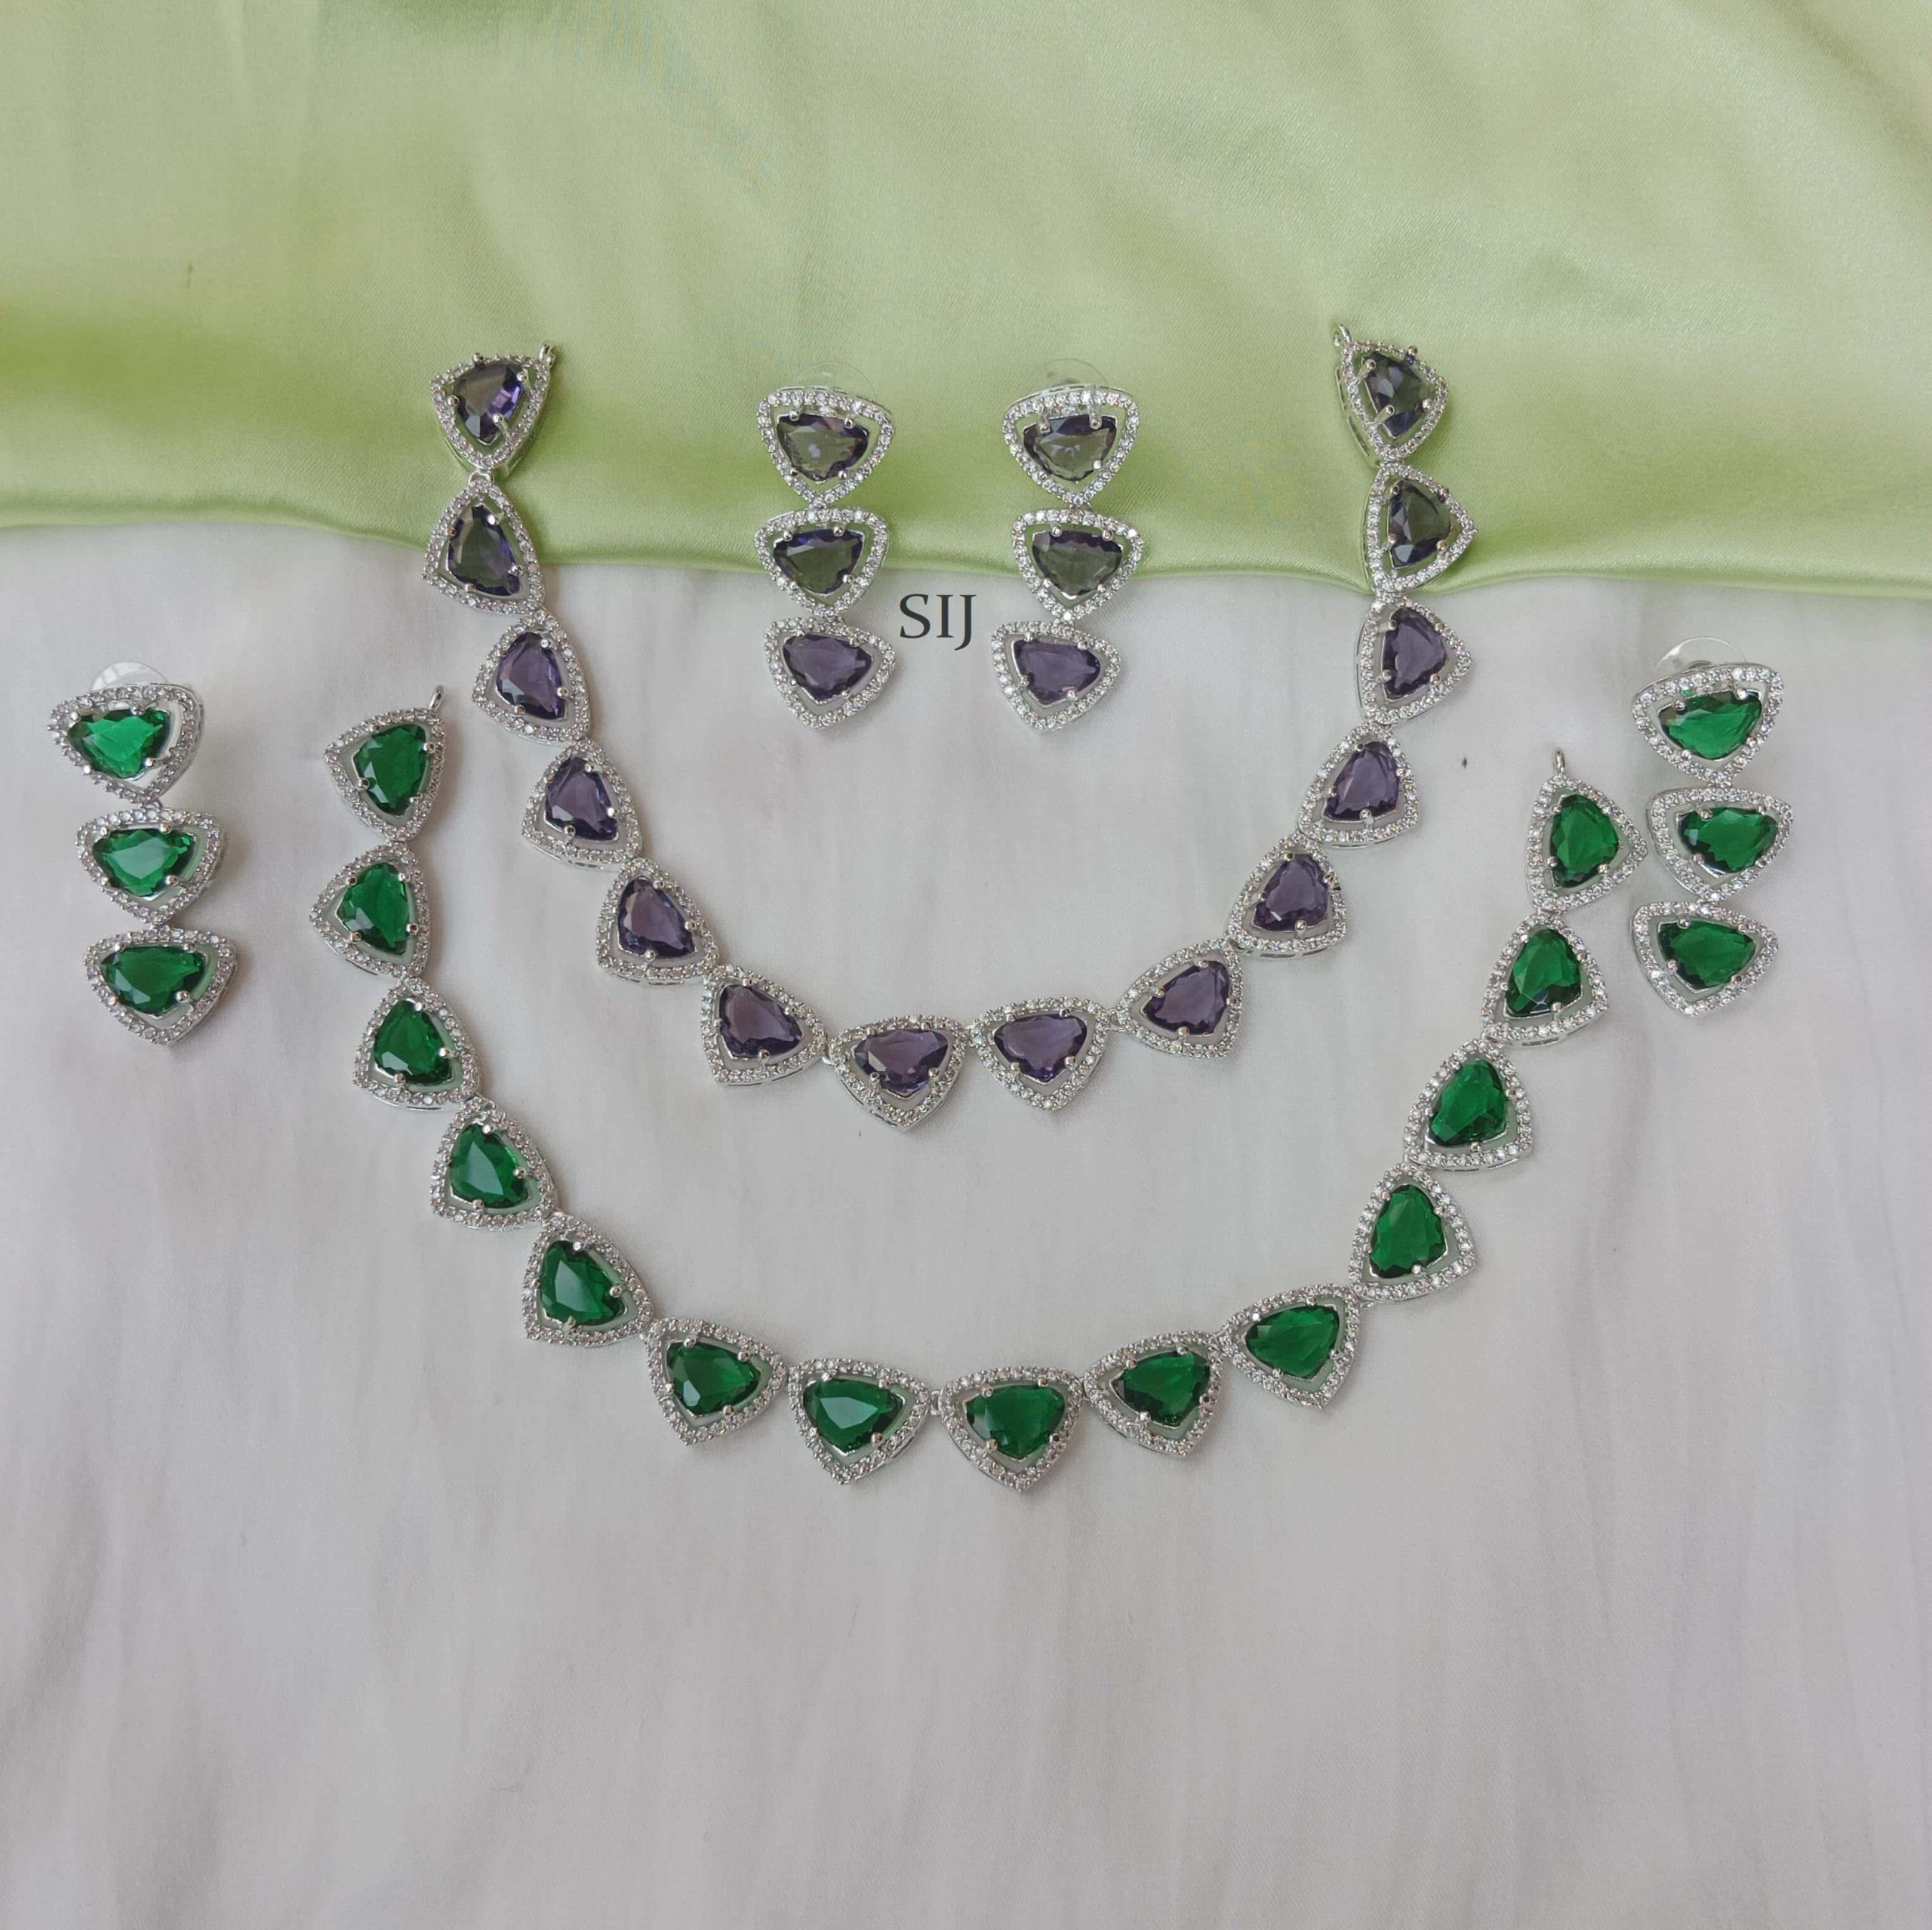 Attractive Triangle Design Purple or Green Stones Necklace